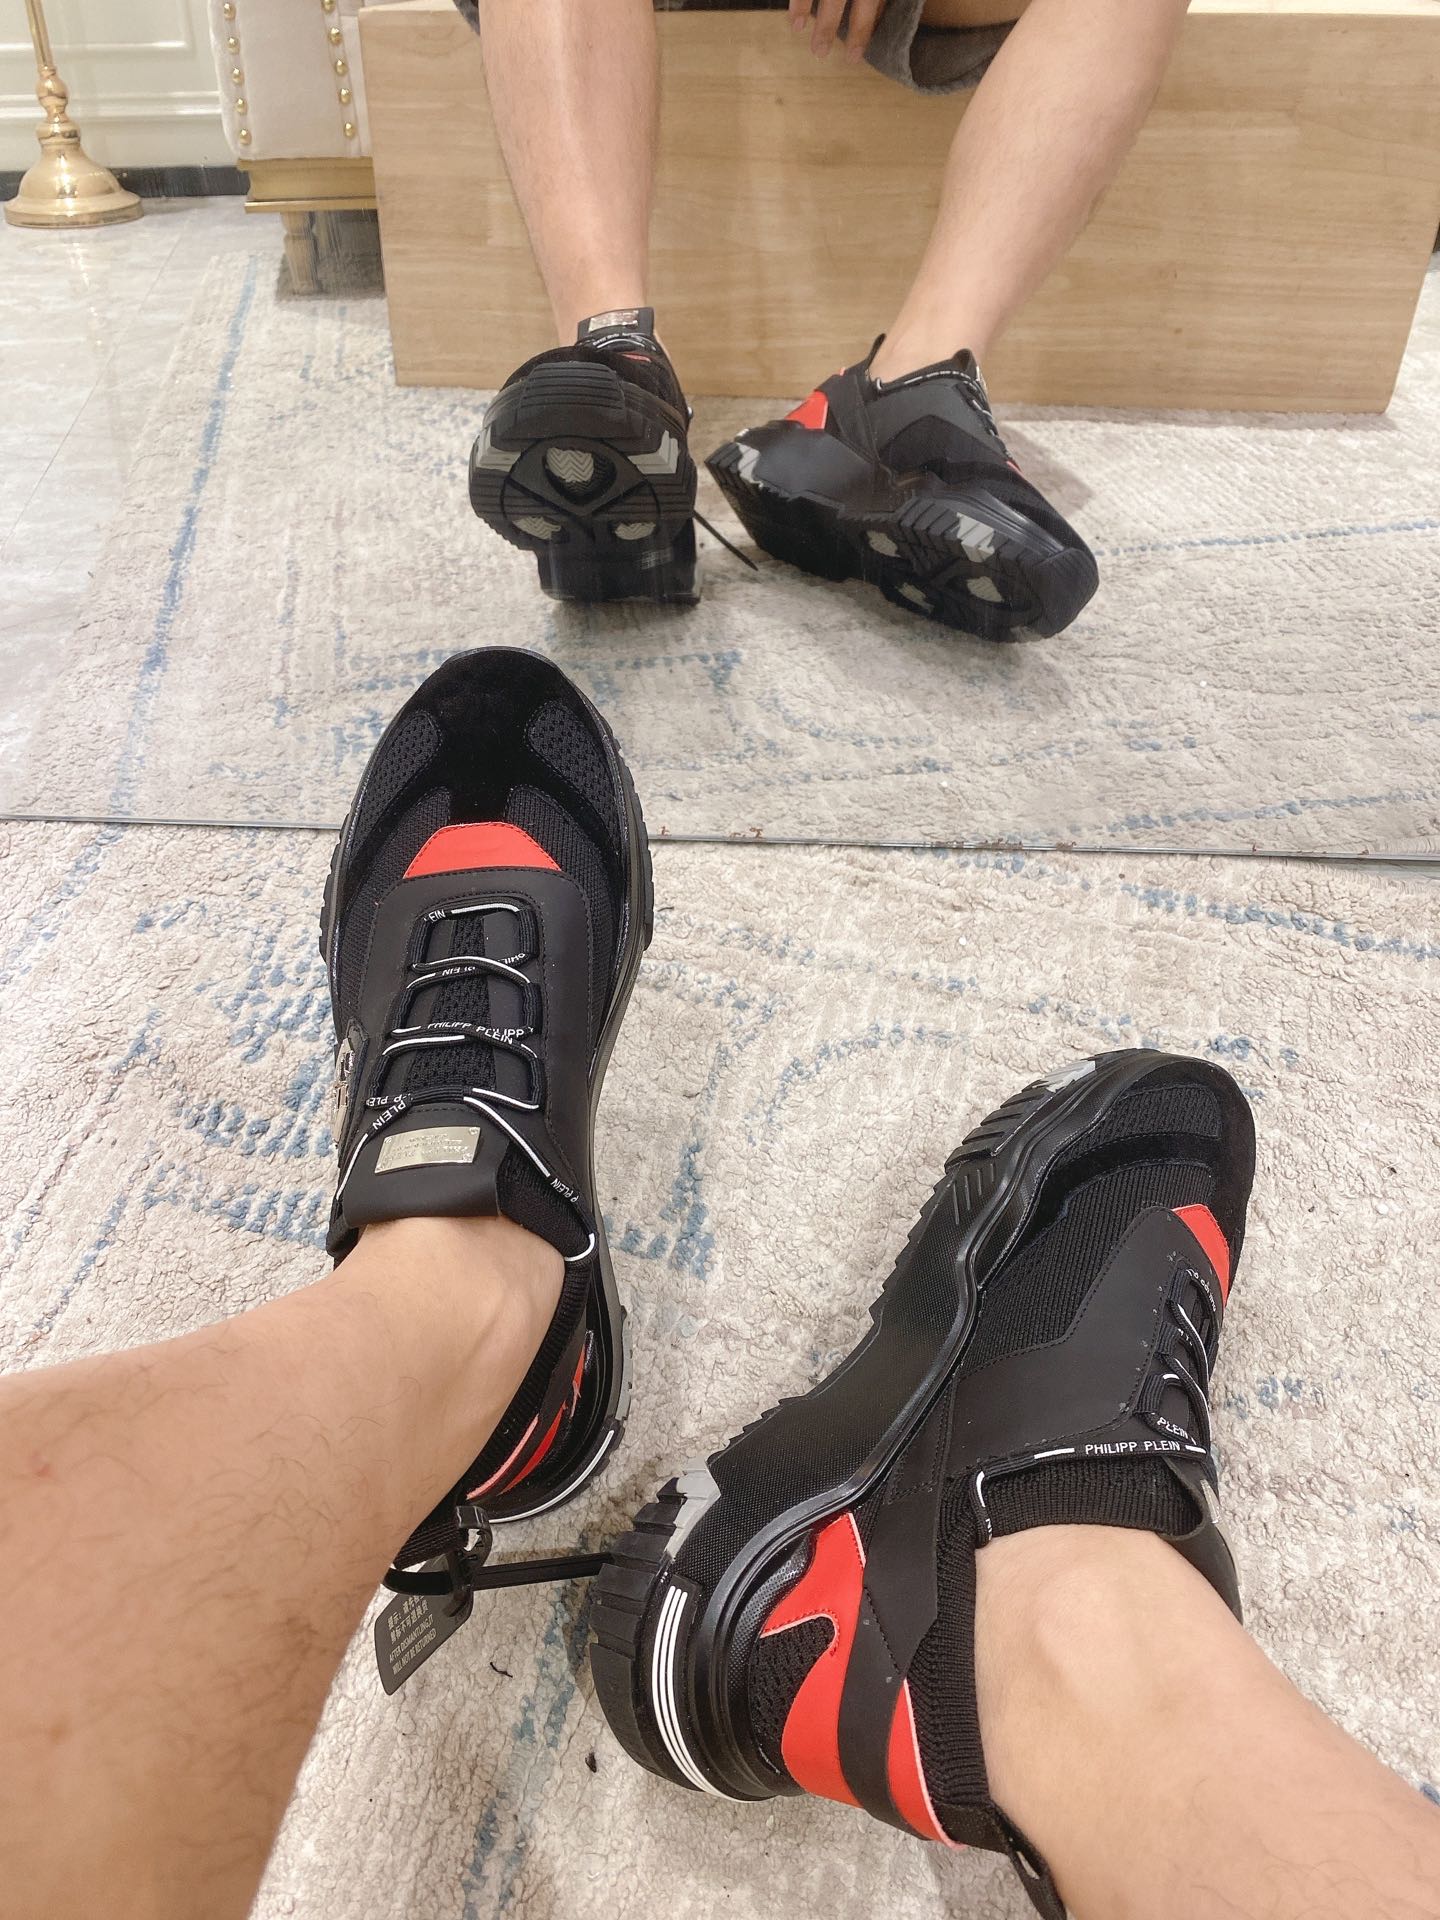 Philipp Plein #8864 Hombres zapatos casuales de moda